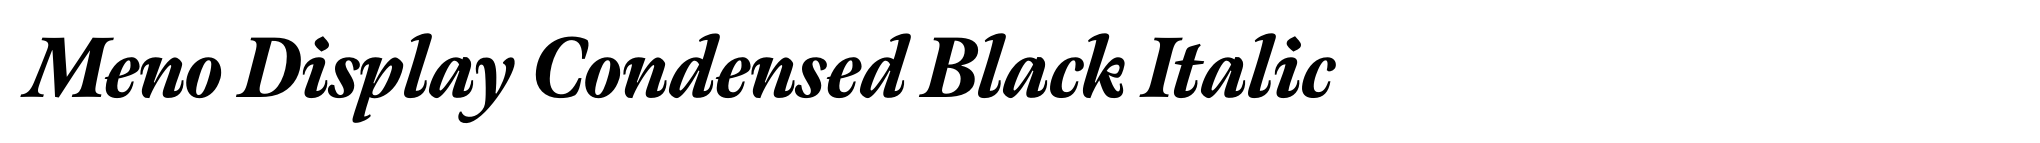 Meno Display Condensed Black Italic image